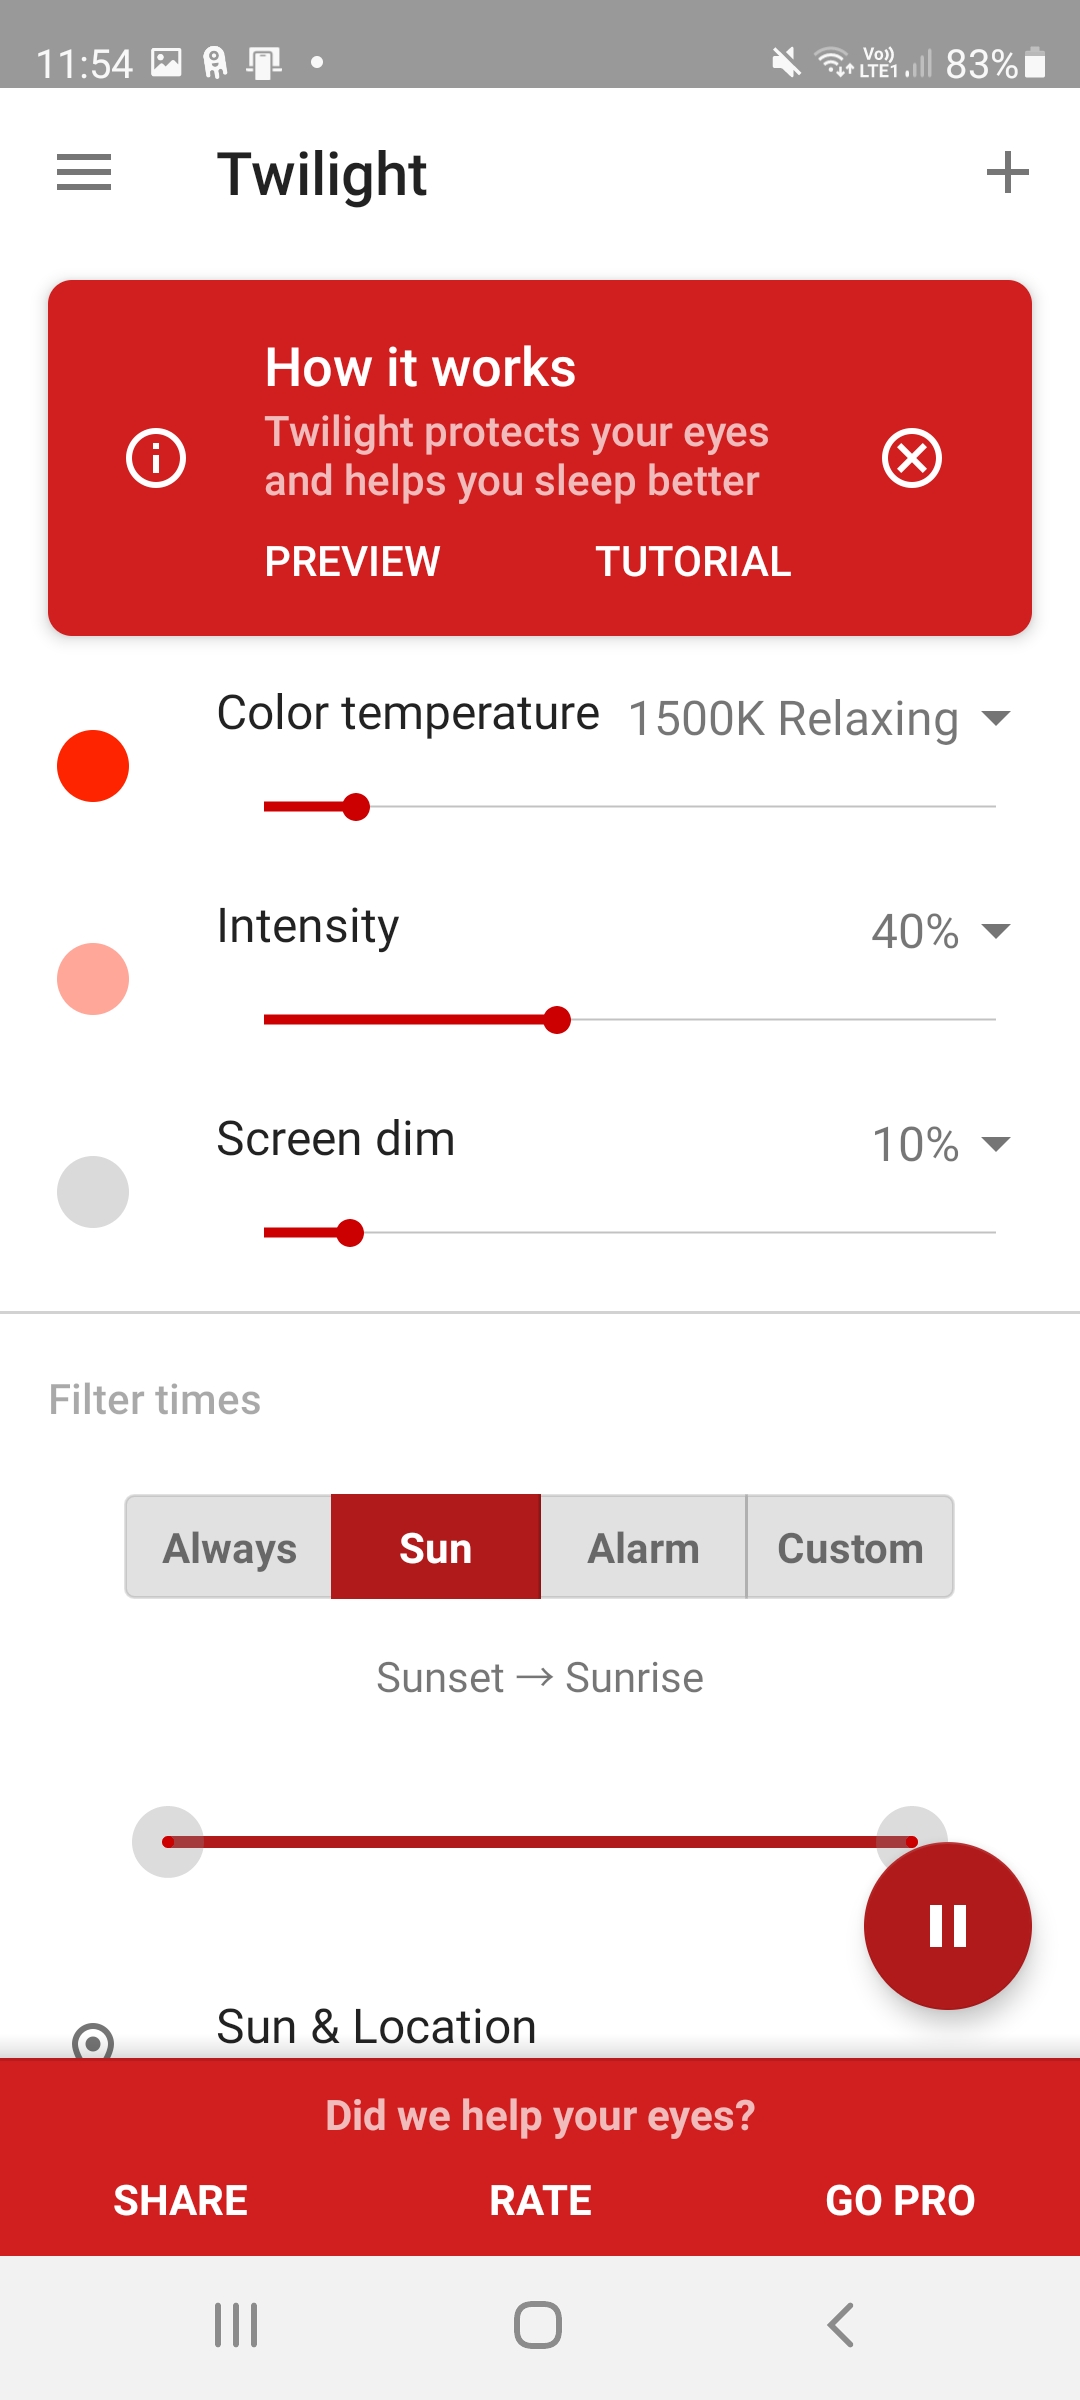 Twilight Blue Light Filter Alternatives: Top 10 Color Temperature